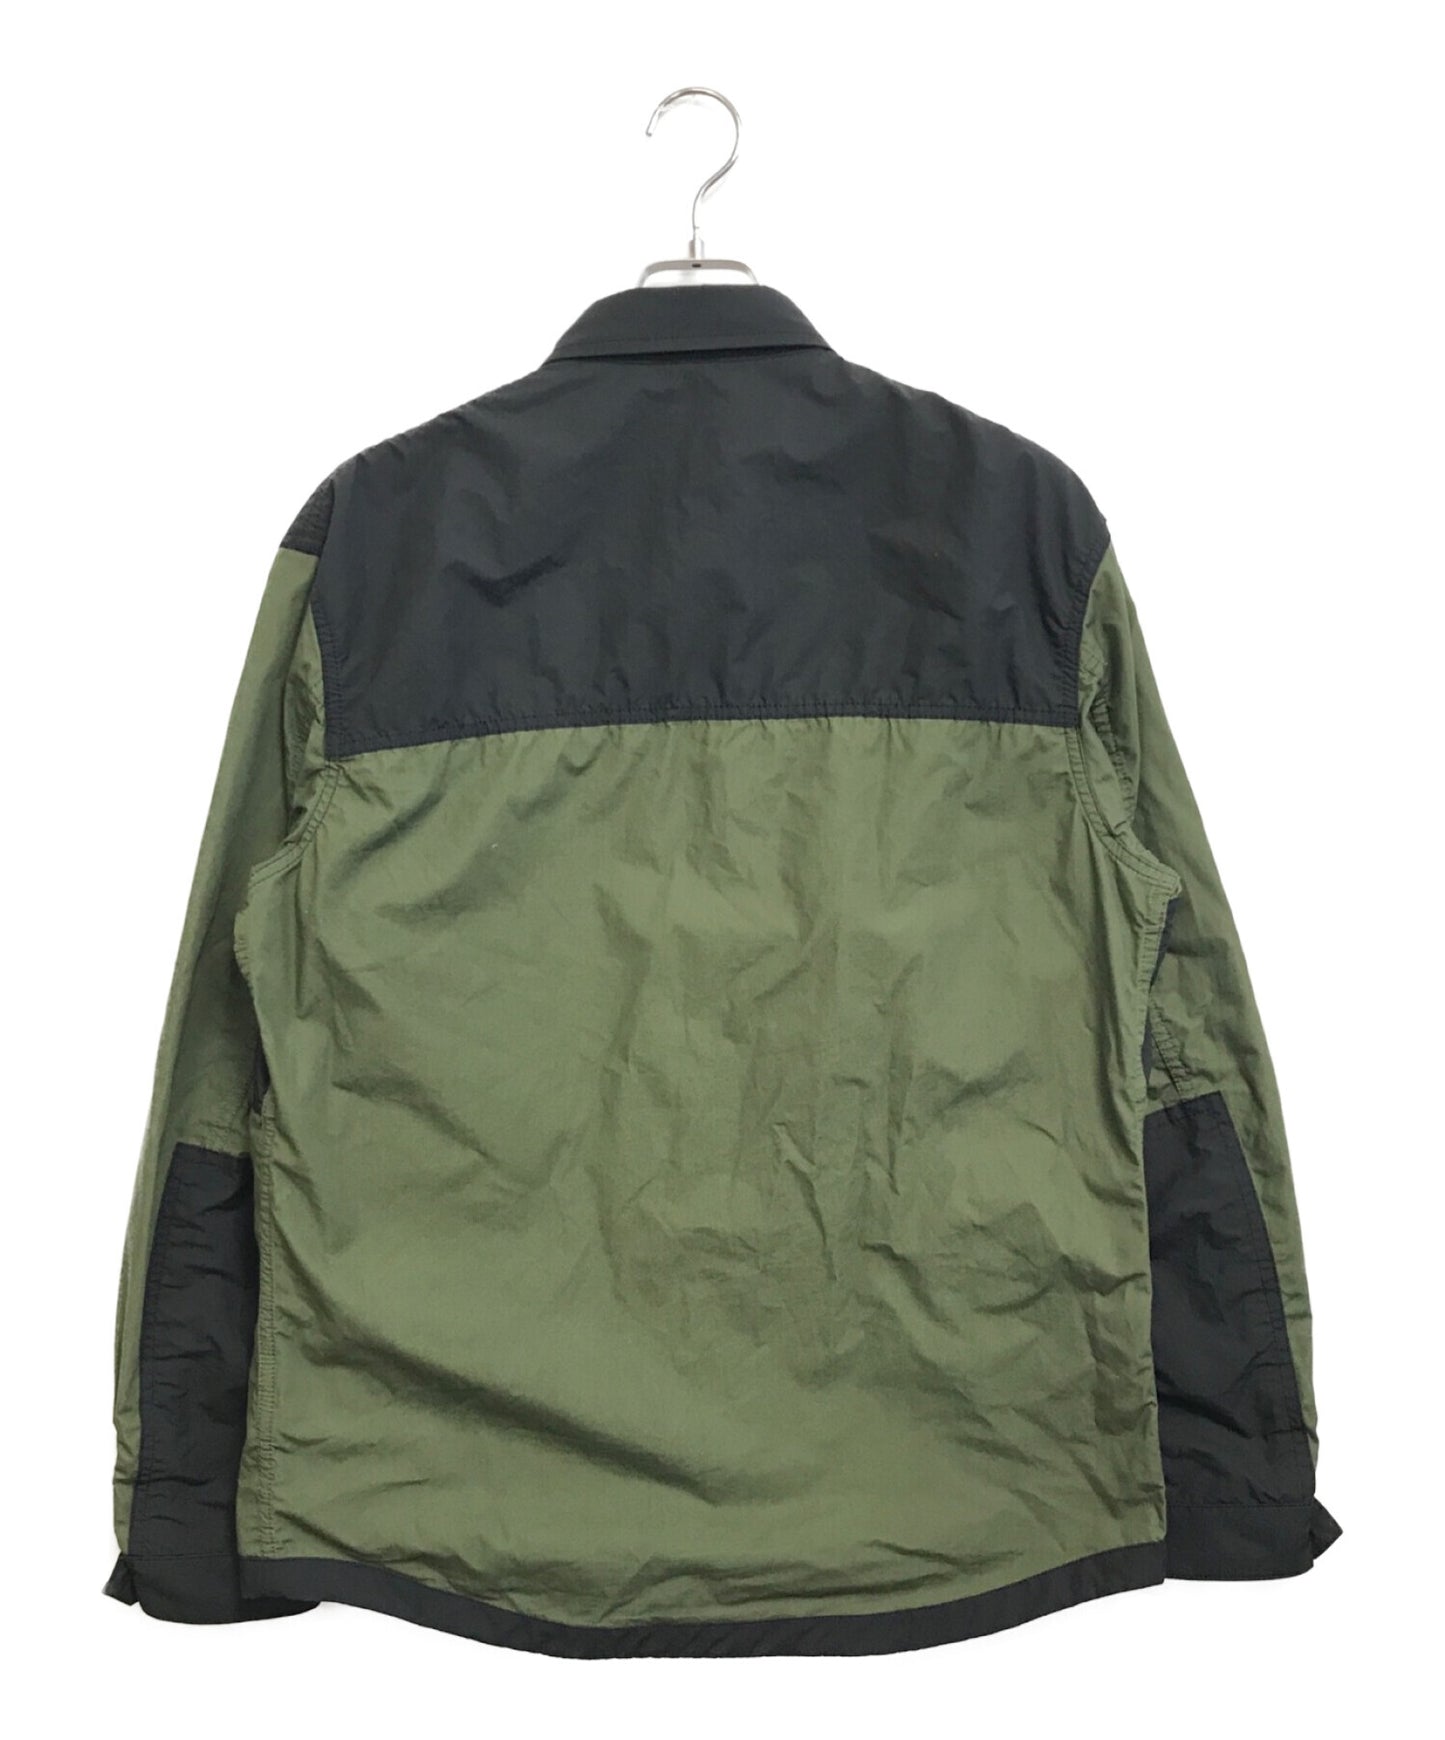 [Pre-owned] COMME des GARCONS HOMME shirt jacket HH-B020